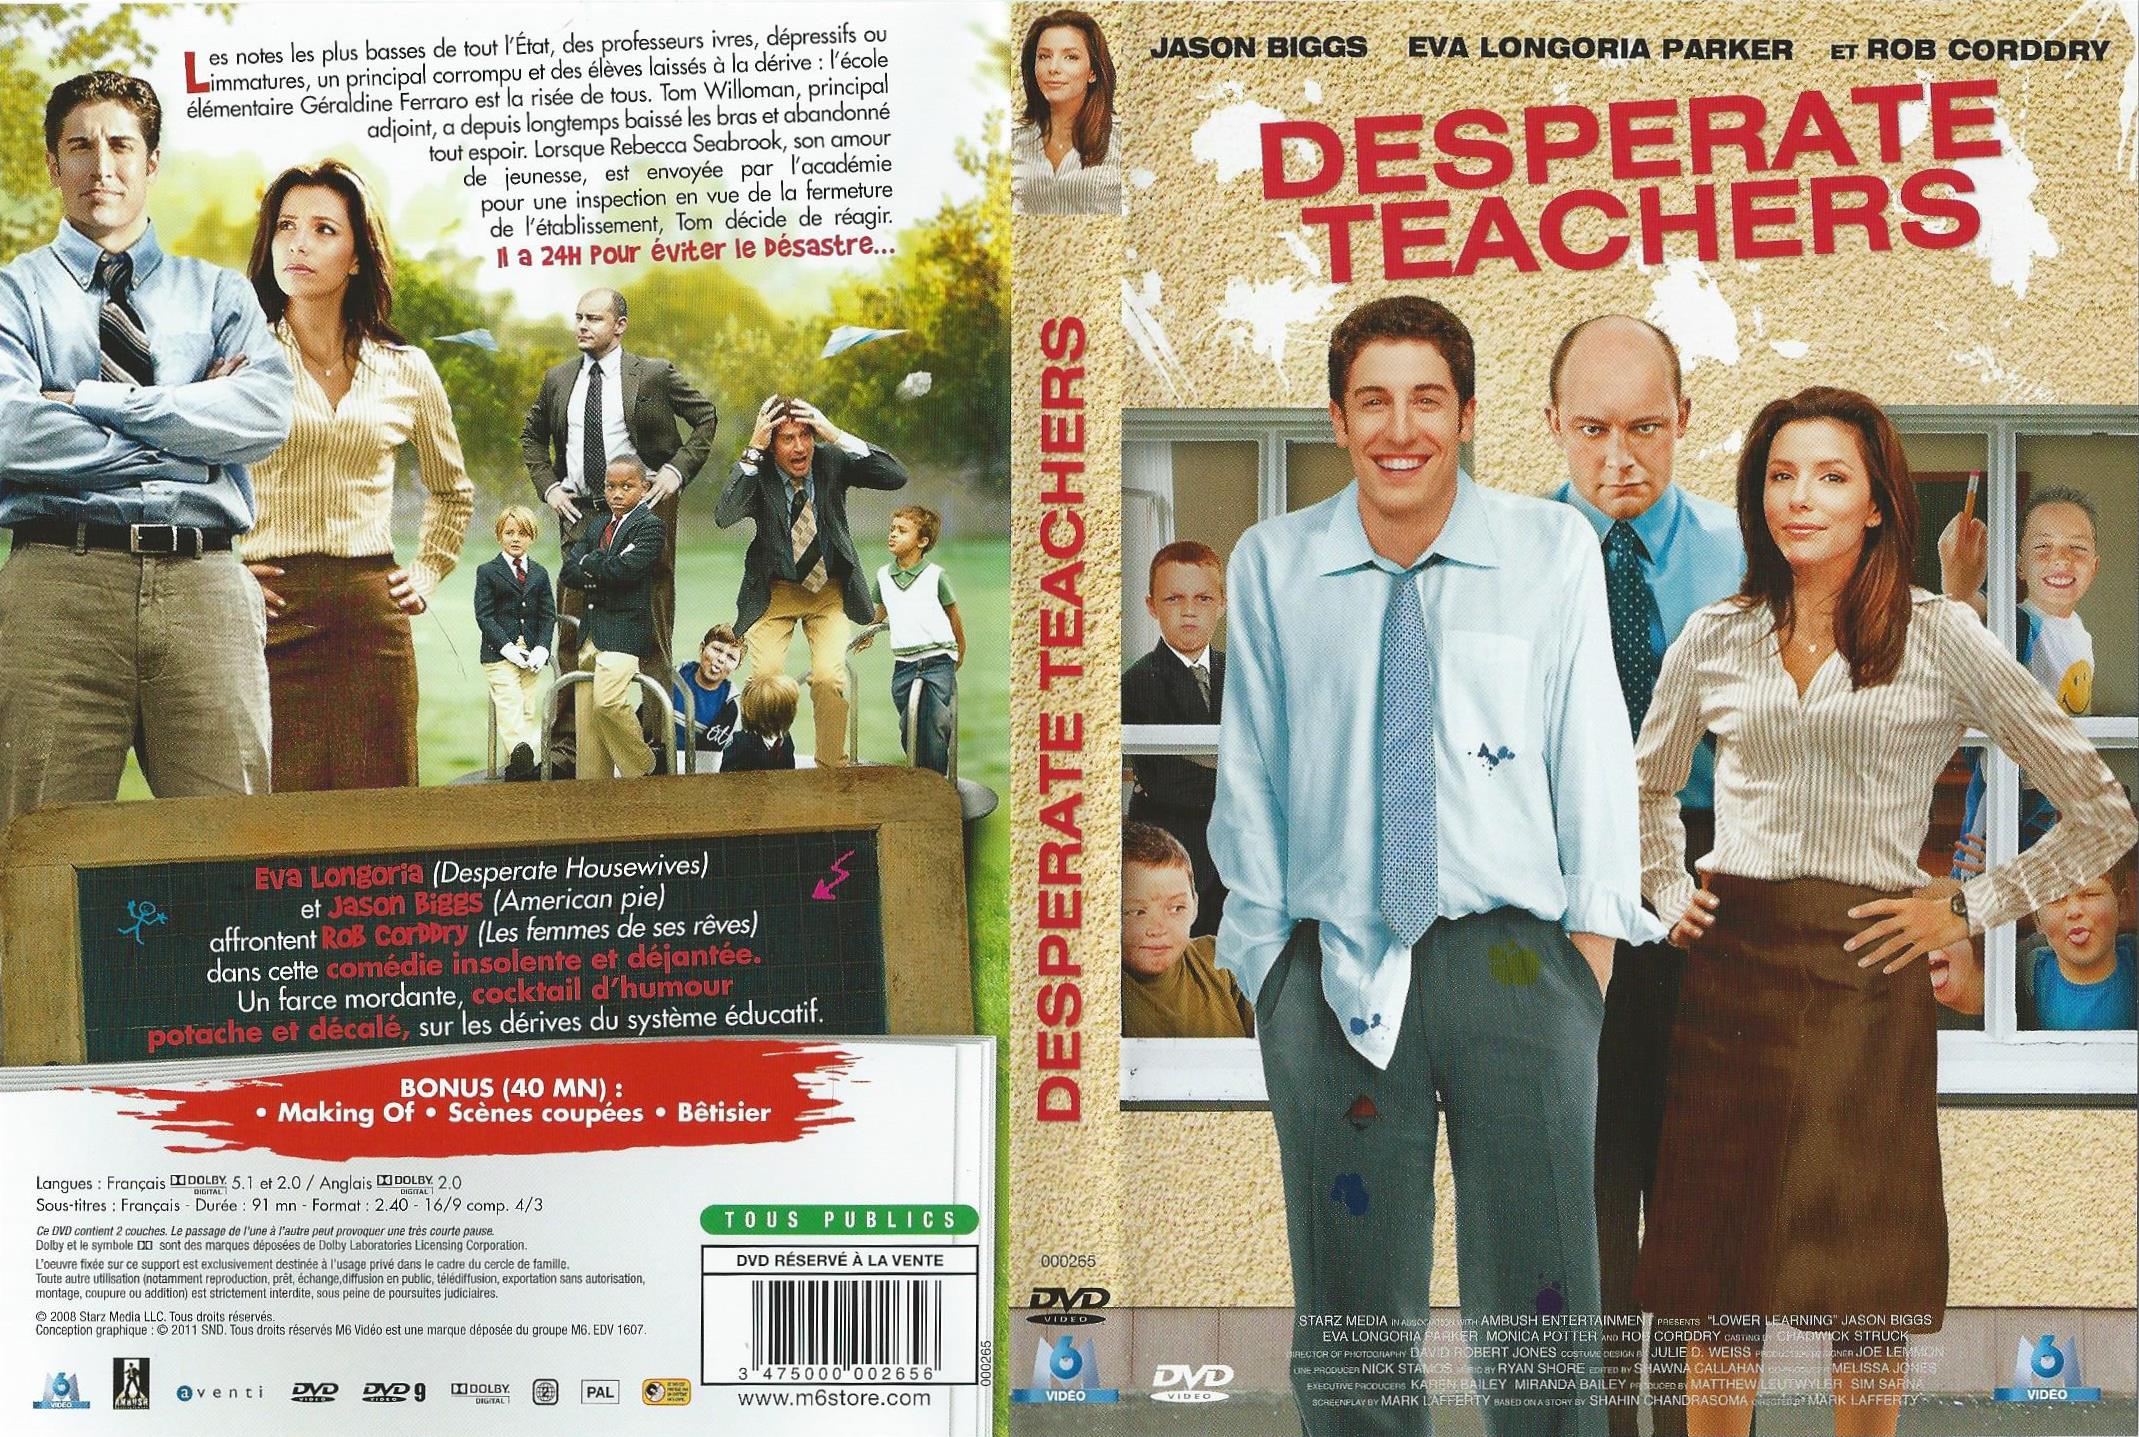 Jaquette DVD Desperate teachers